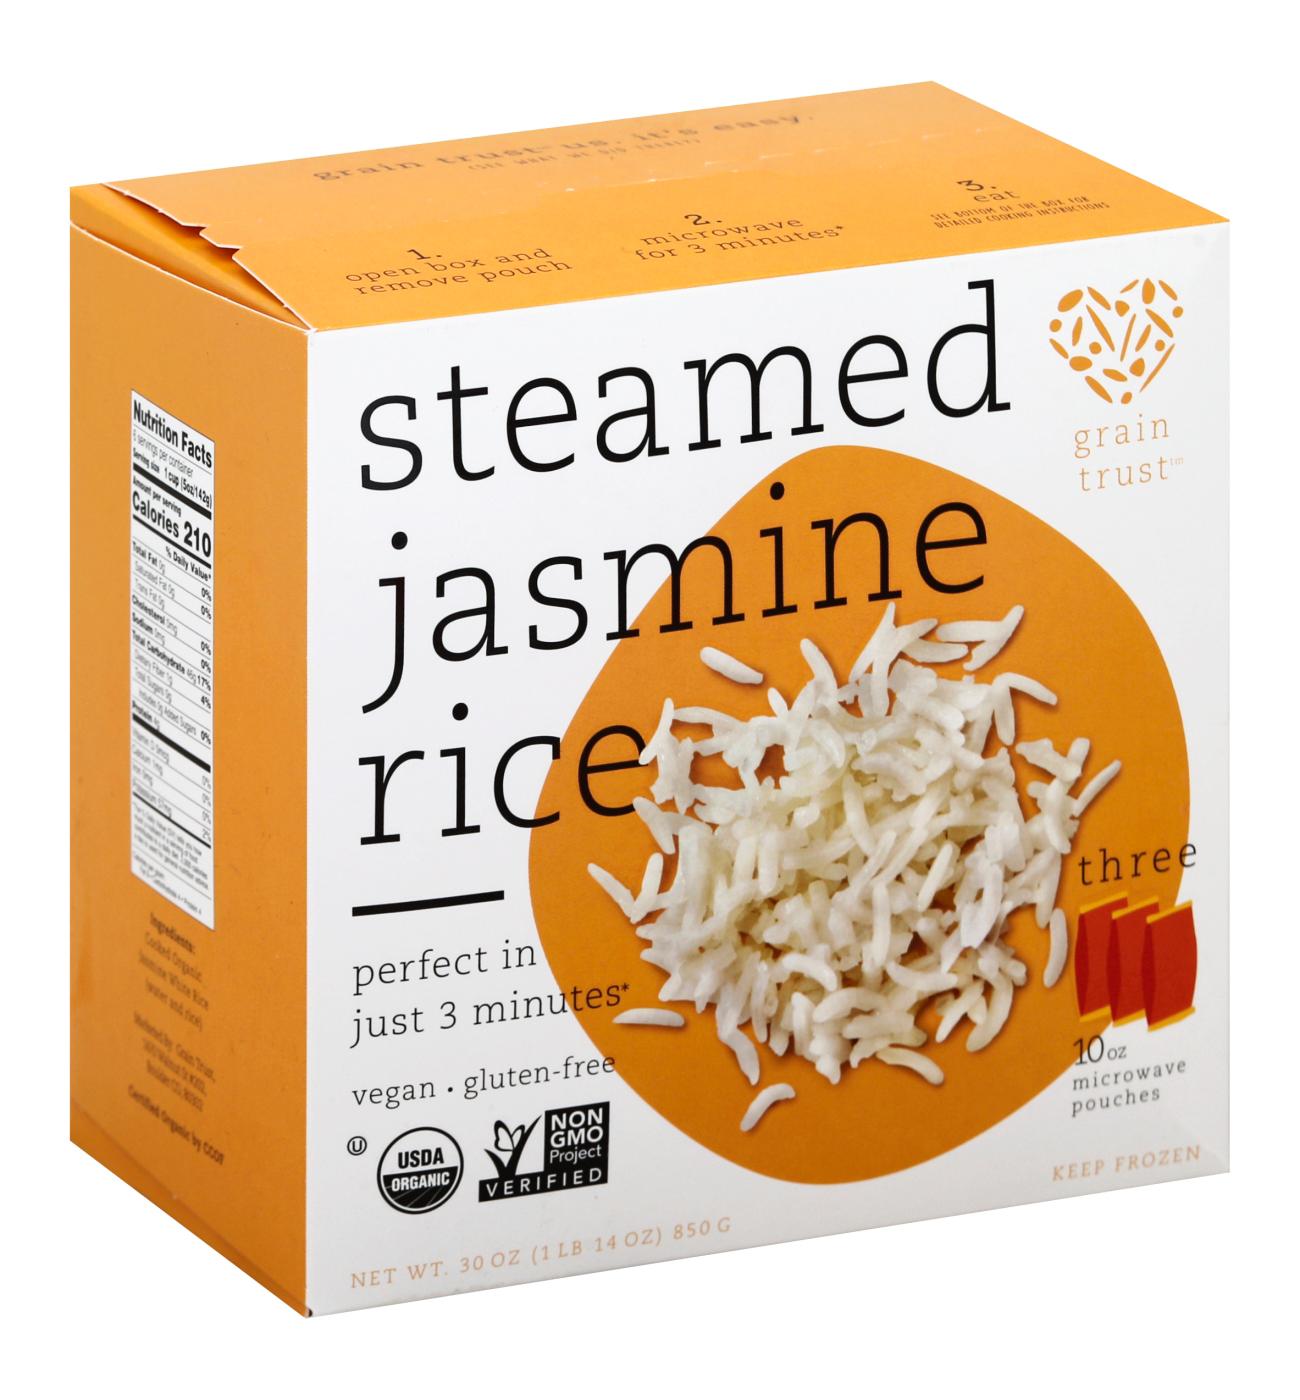 Grain Trust Steamed Jasmine Rice; image 2 of 2